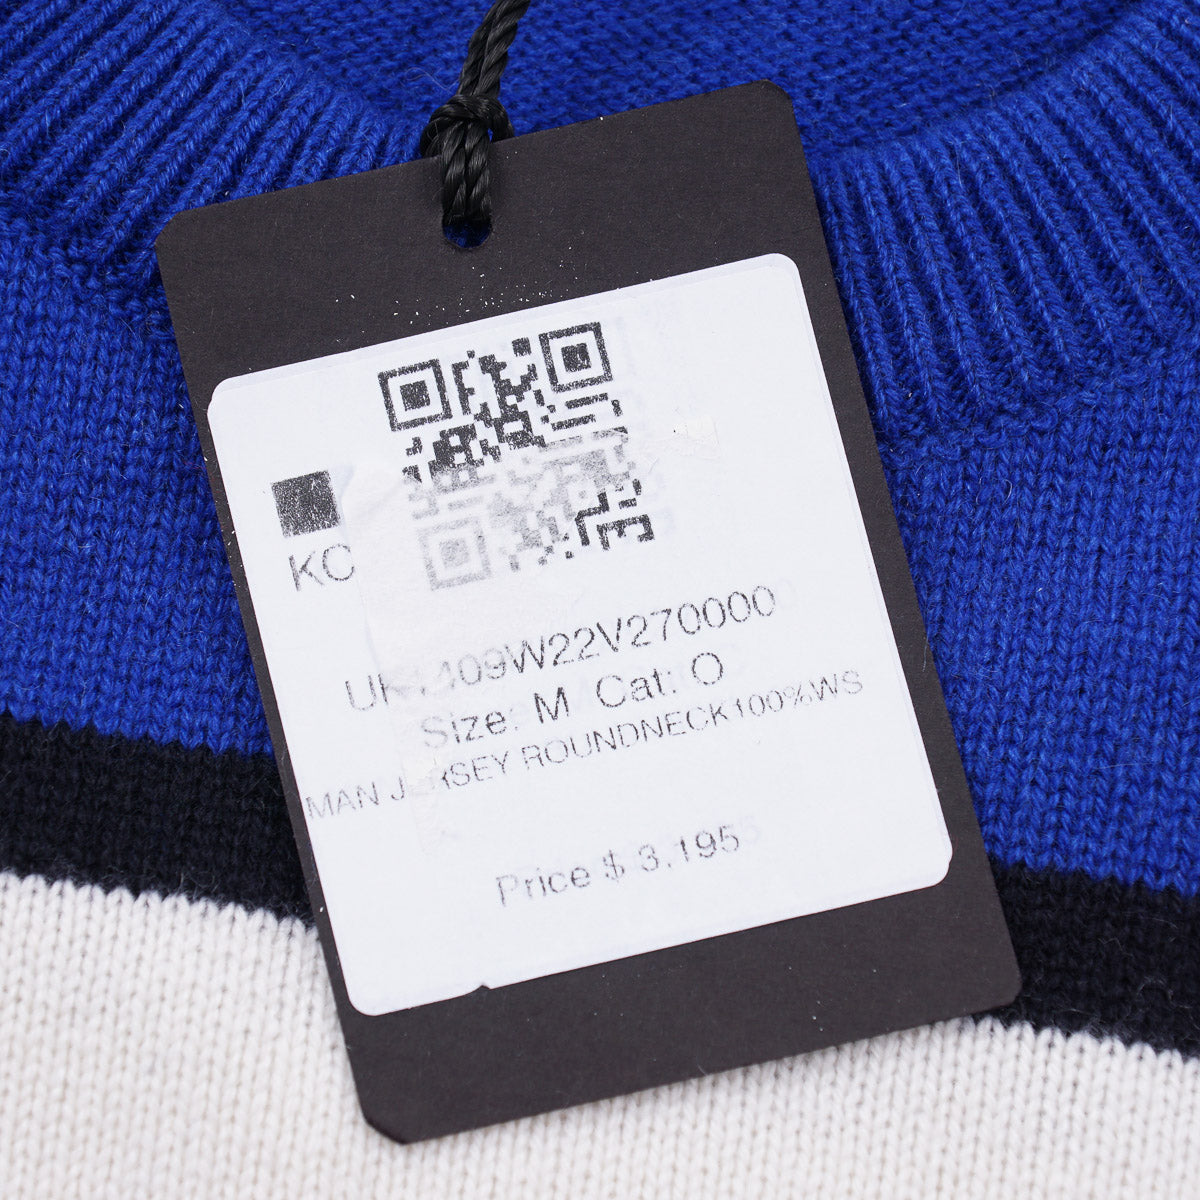 Kiton Slim-Fit Knit Cashmere Sweater - Top Shelf Apparel